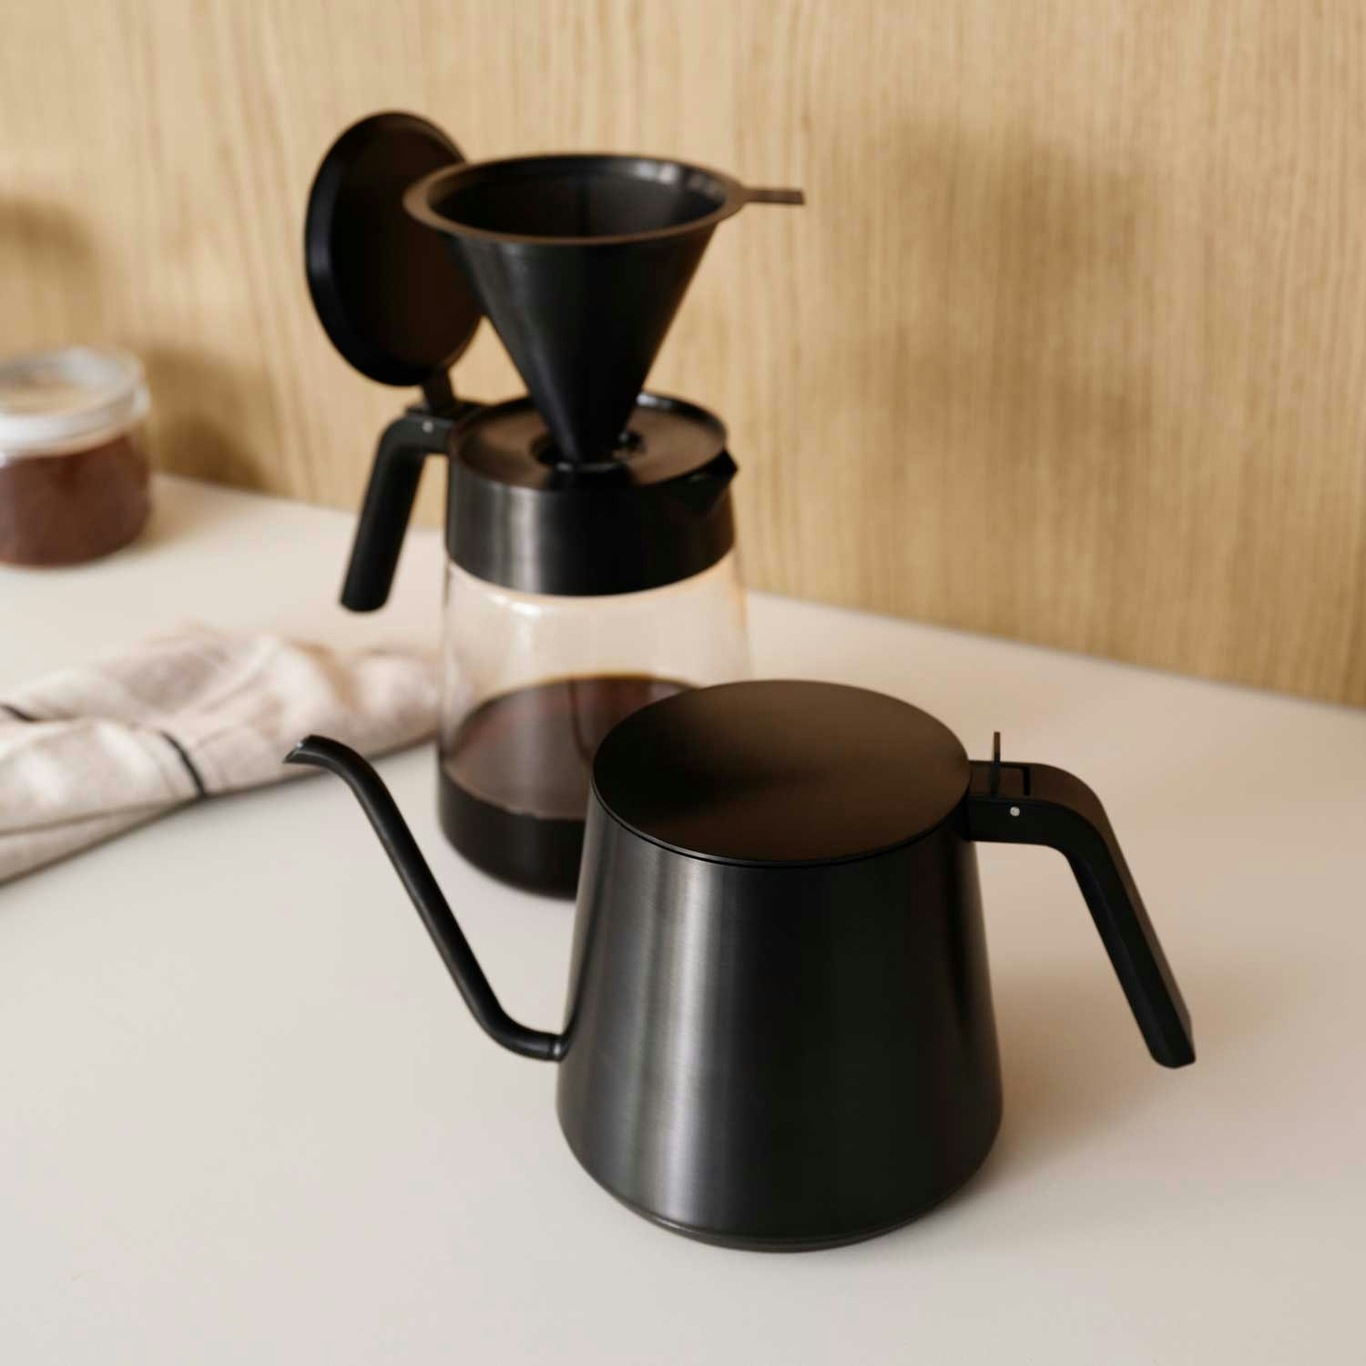 https://royaldesign.com/image/2/stelton-nohr-gooseneck-kettle-1-l-3?w=800&quality=80